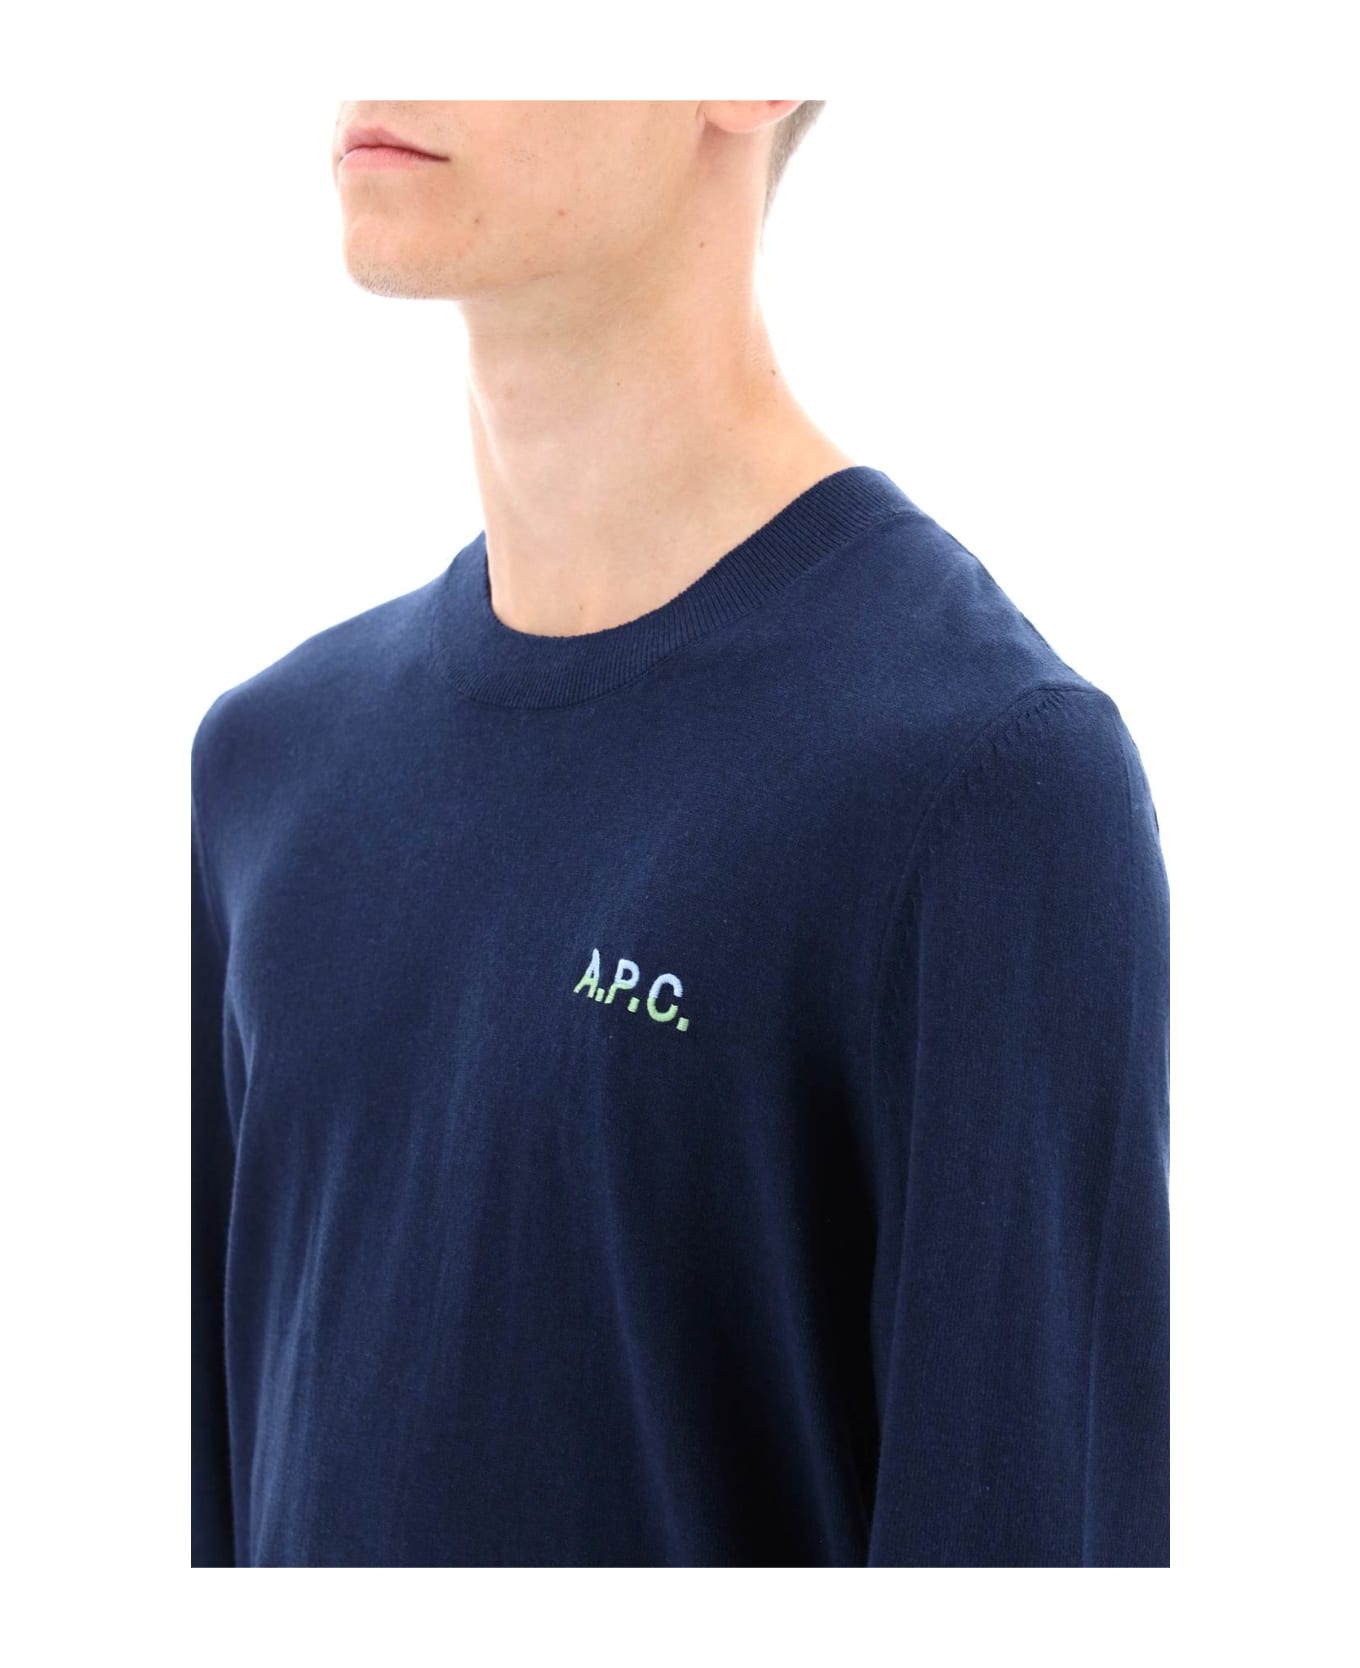 A.P.C. Alols Cotton Crew-neck Sweater - blue